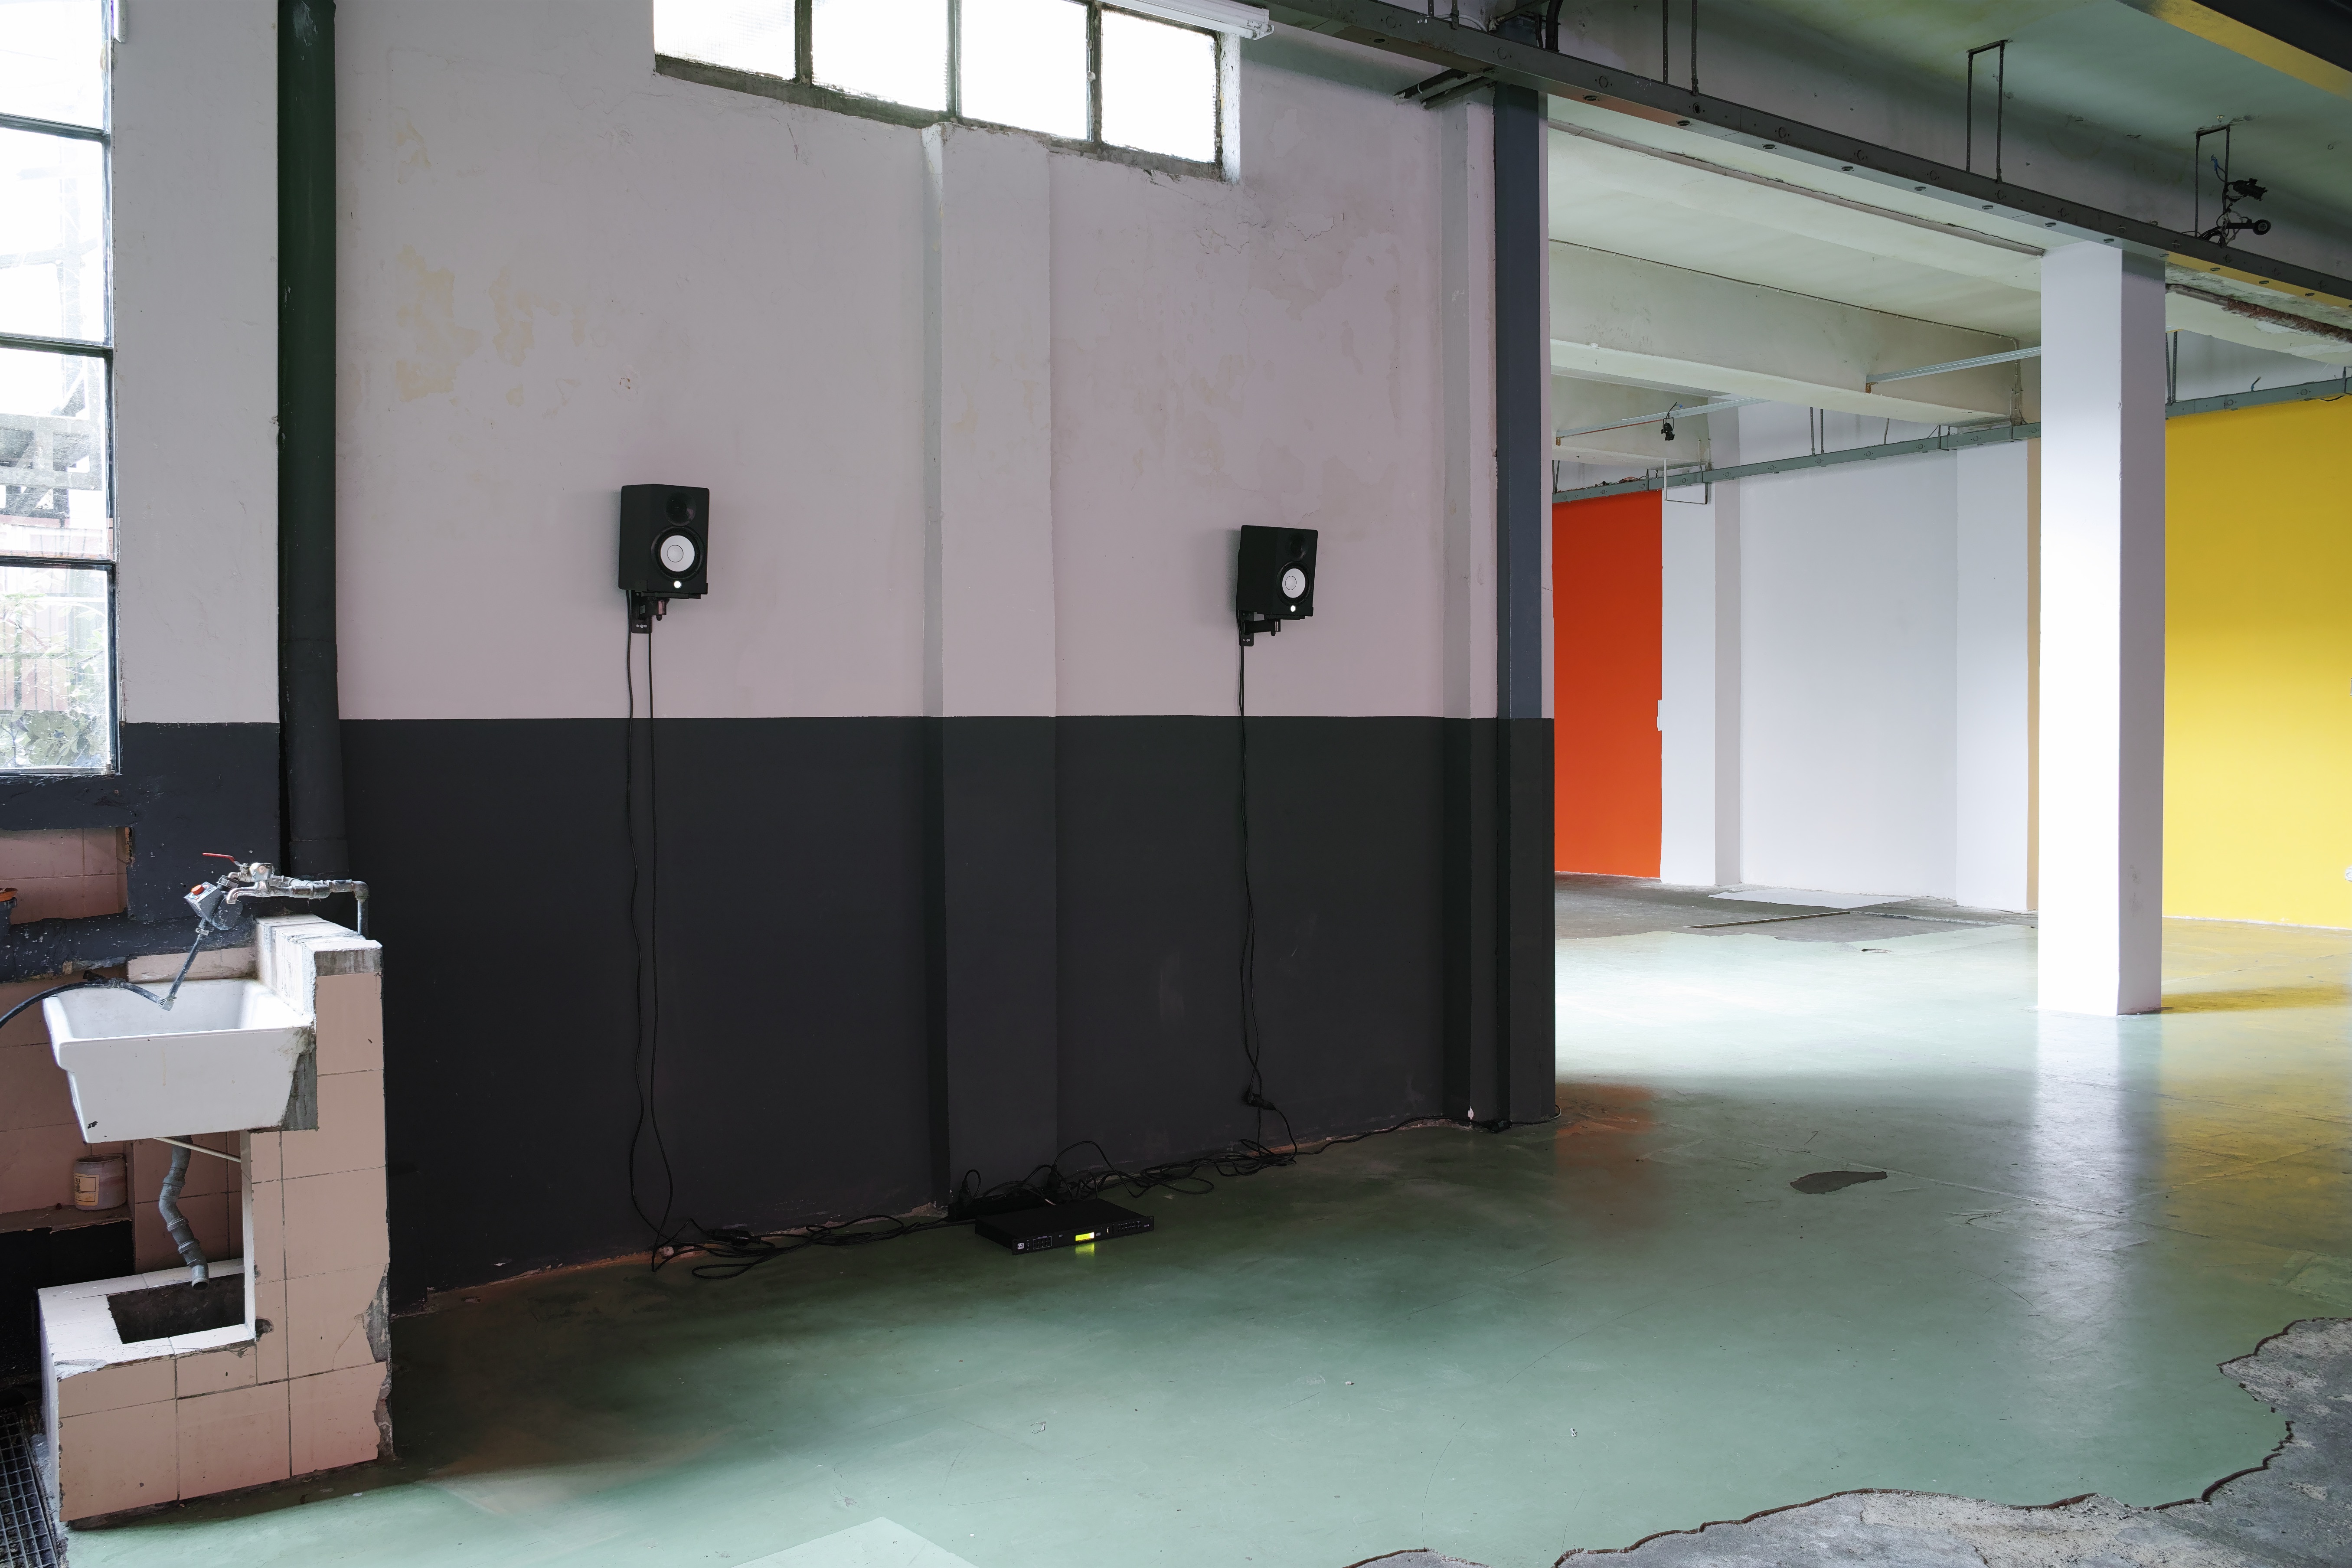 Ippocampo (Assata Shakur)  2016, 13’  Installation view at Assab One, Milano, 2017, Assata Shakur's spoken voice, digital archive audio material, background noise, Sub-bass sounds